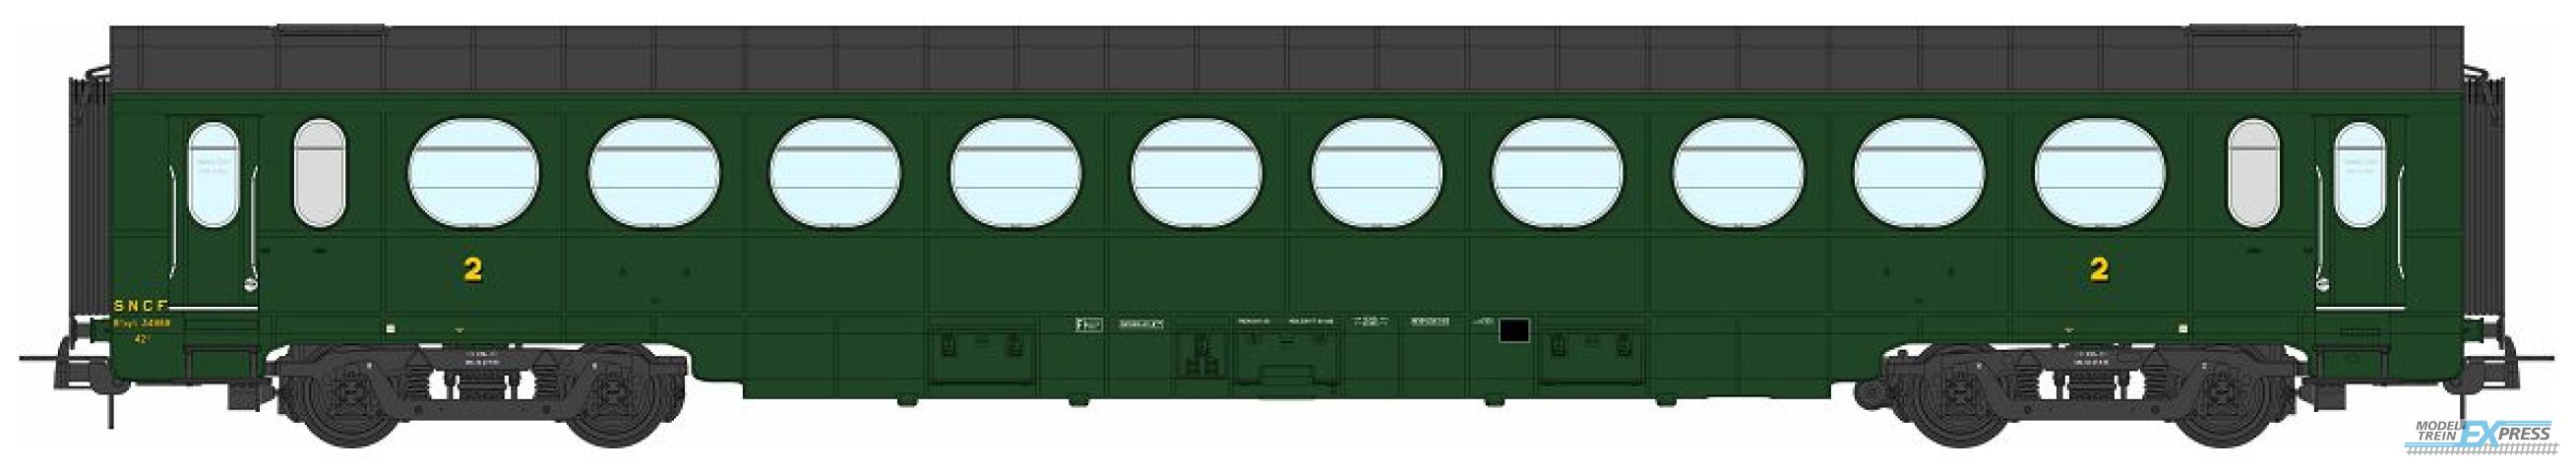 REE models VB-472 ETAT Car, B10, green 306, SNCF Period III B